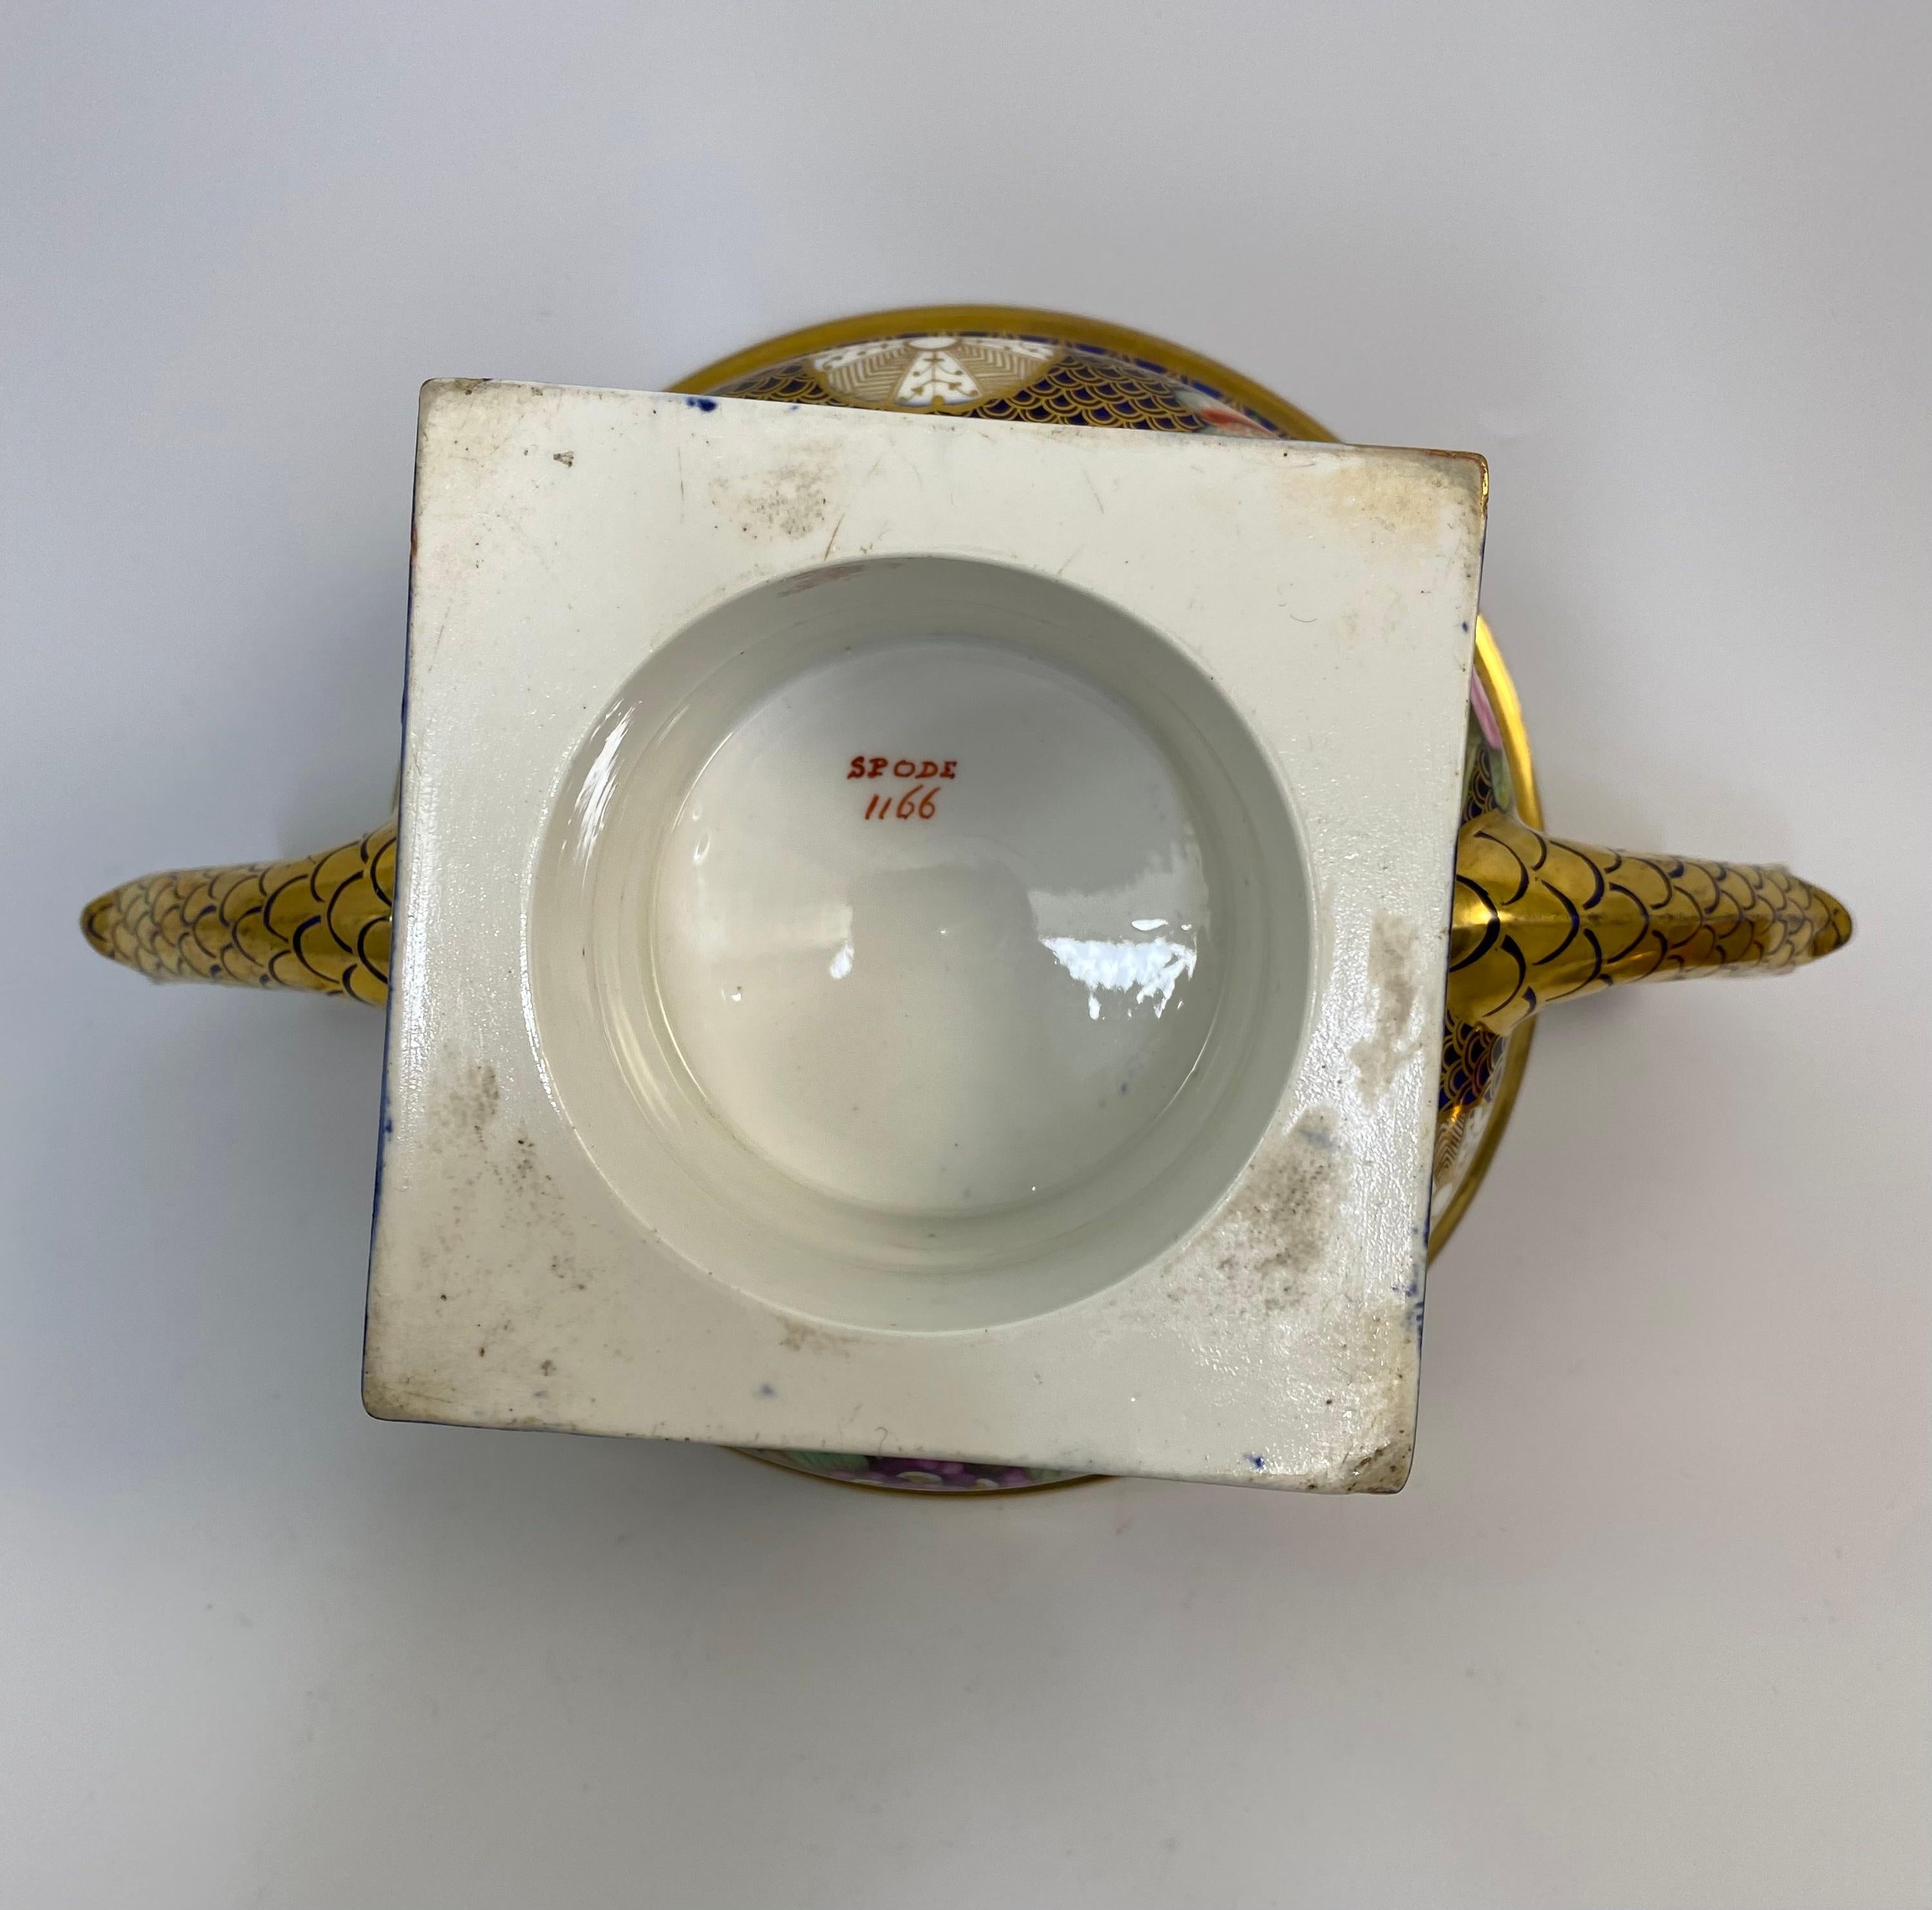 Spode porcelain pot pourri and cover, ‘1166’ pattern, c. 1820. 8